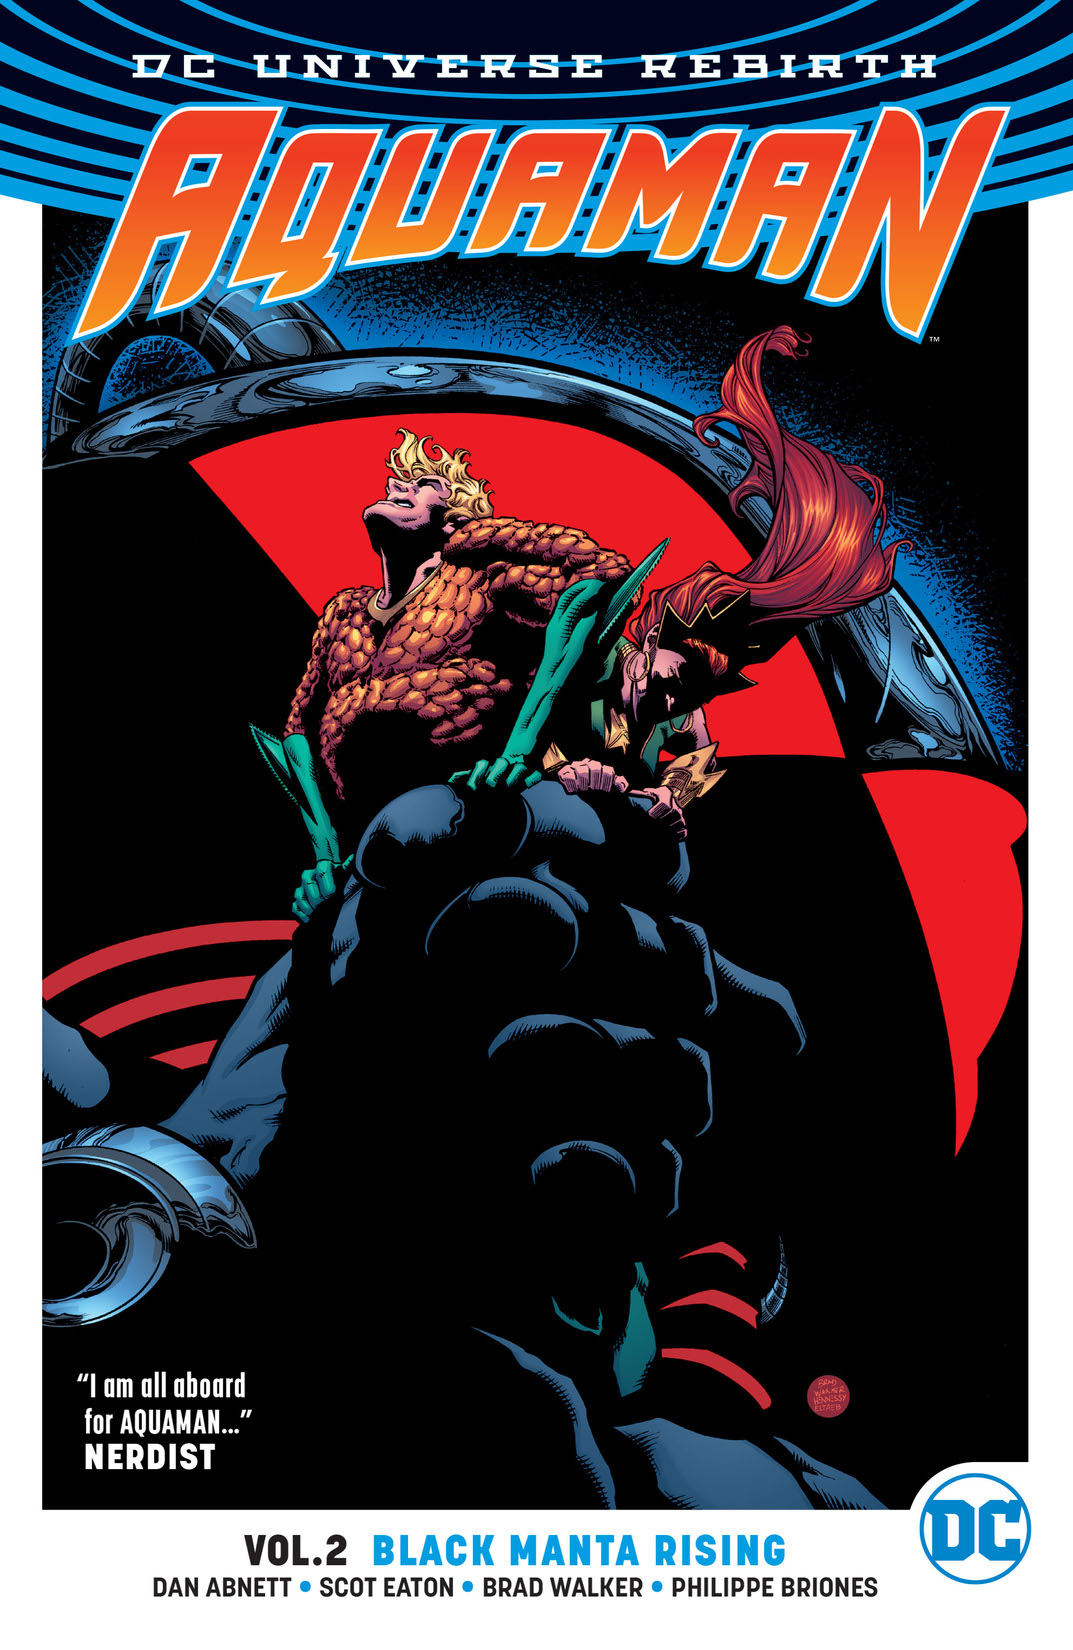 Aquaman Vol. 2: Black Manta Rising preview images